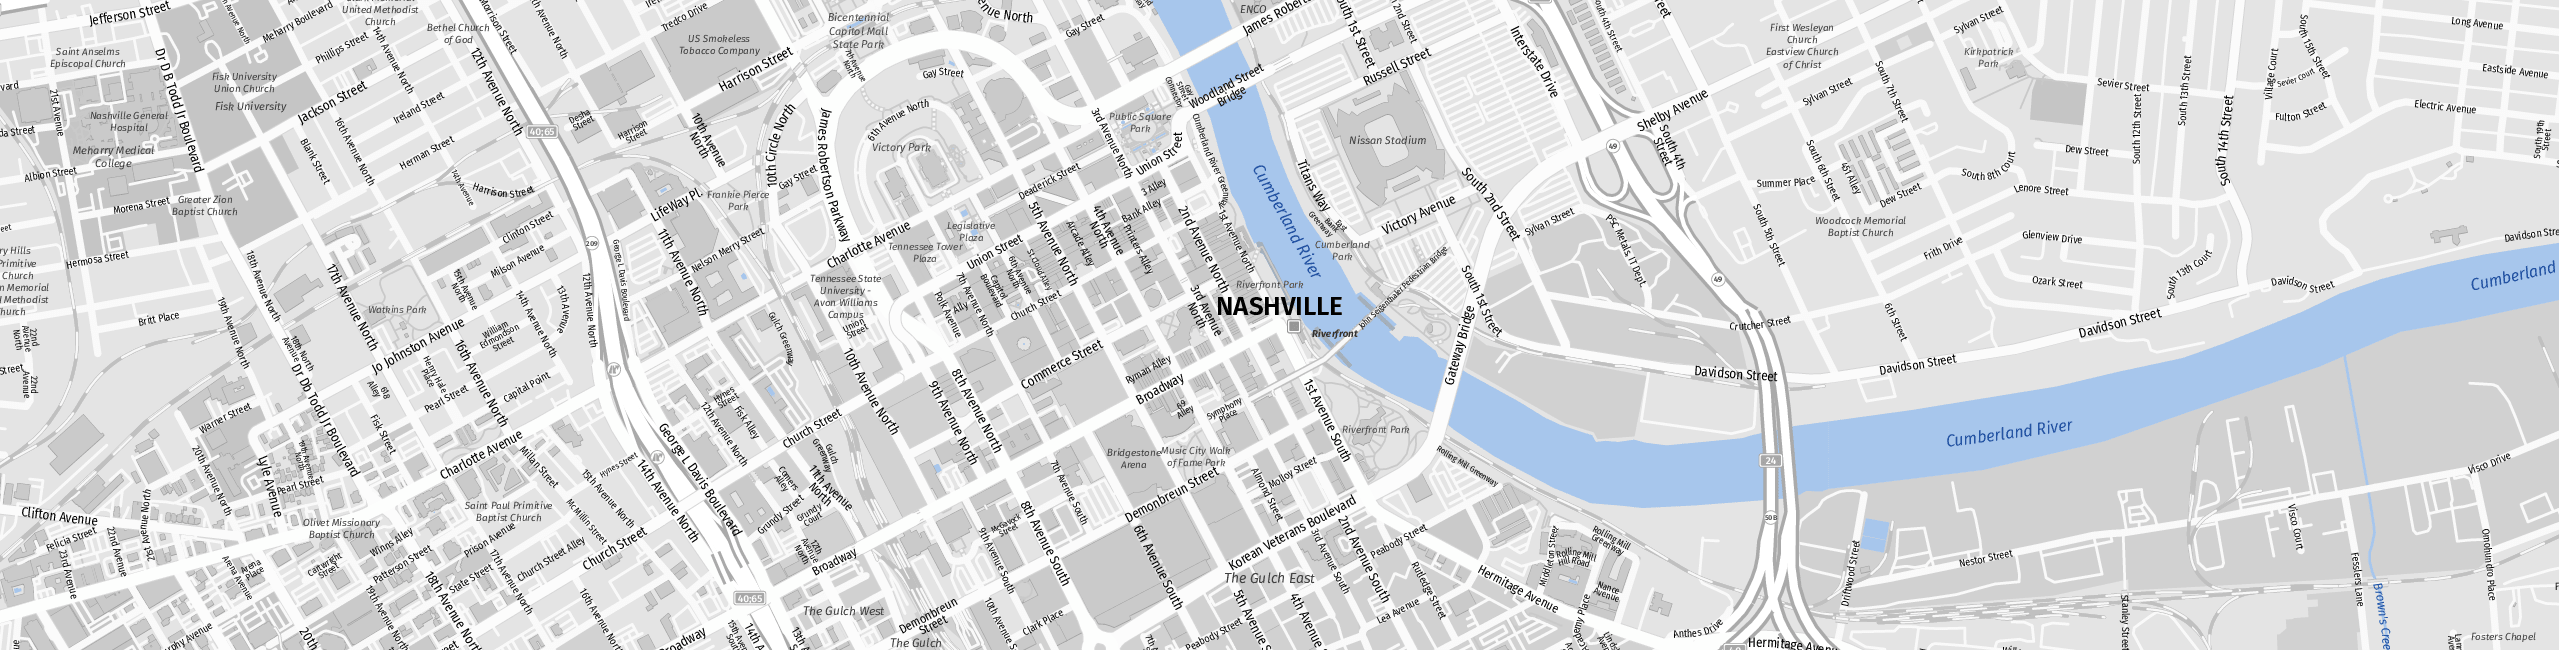 Stadtplan Nashville zum Downloaden.